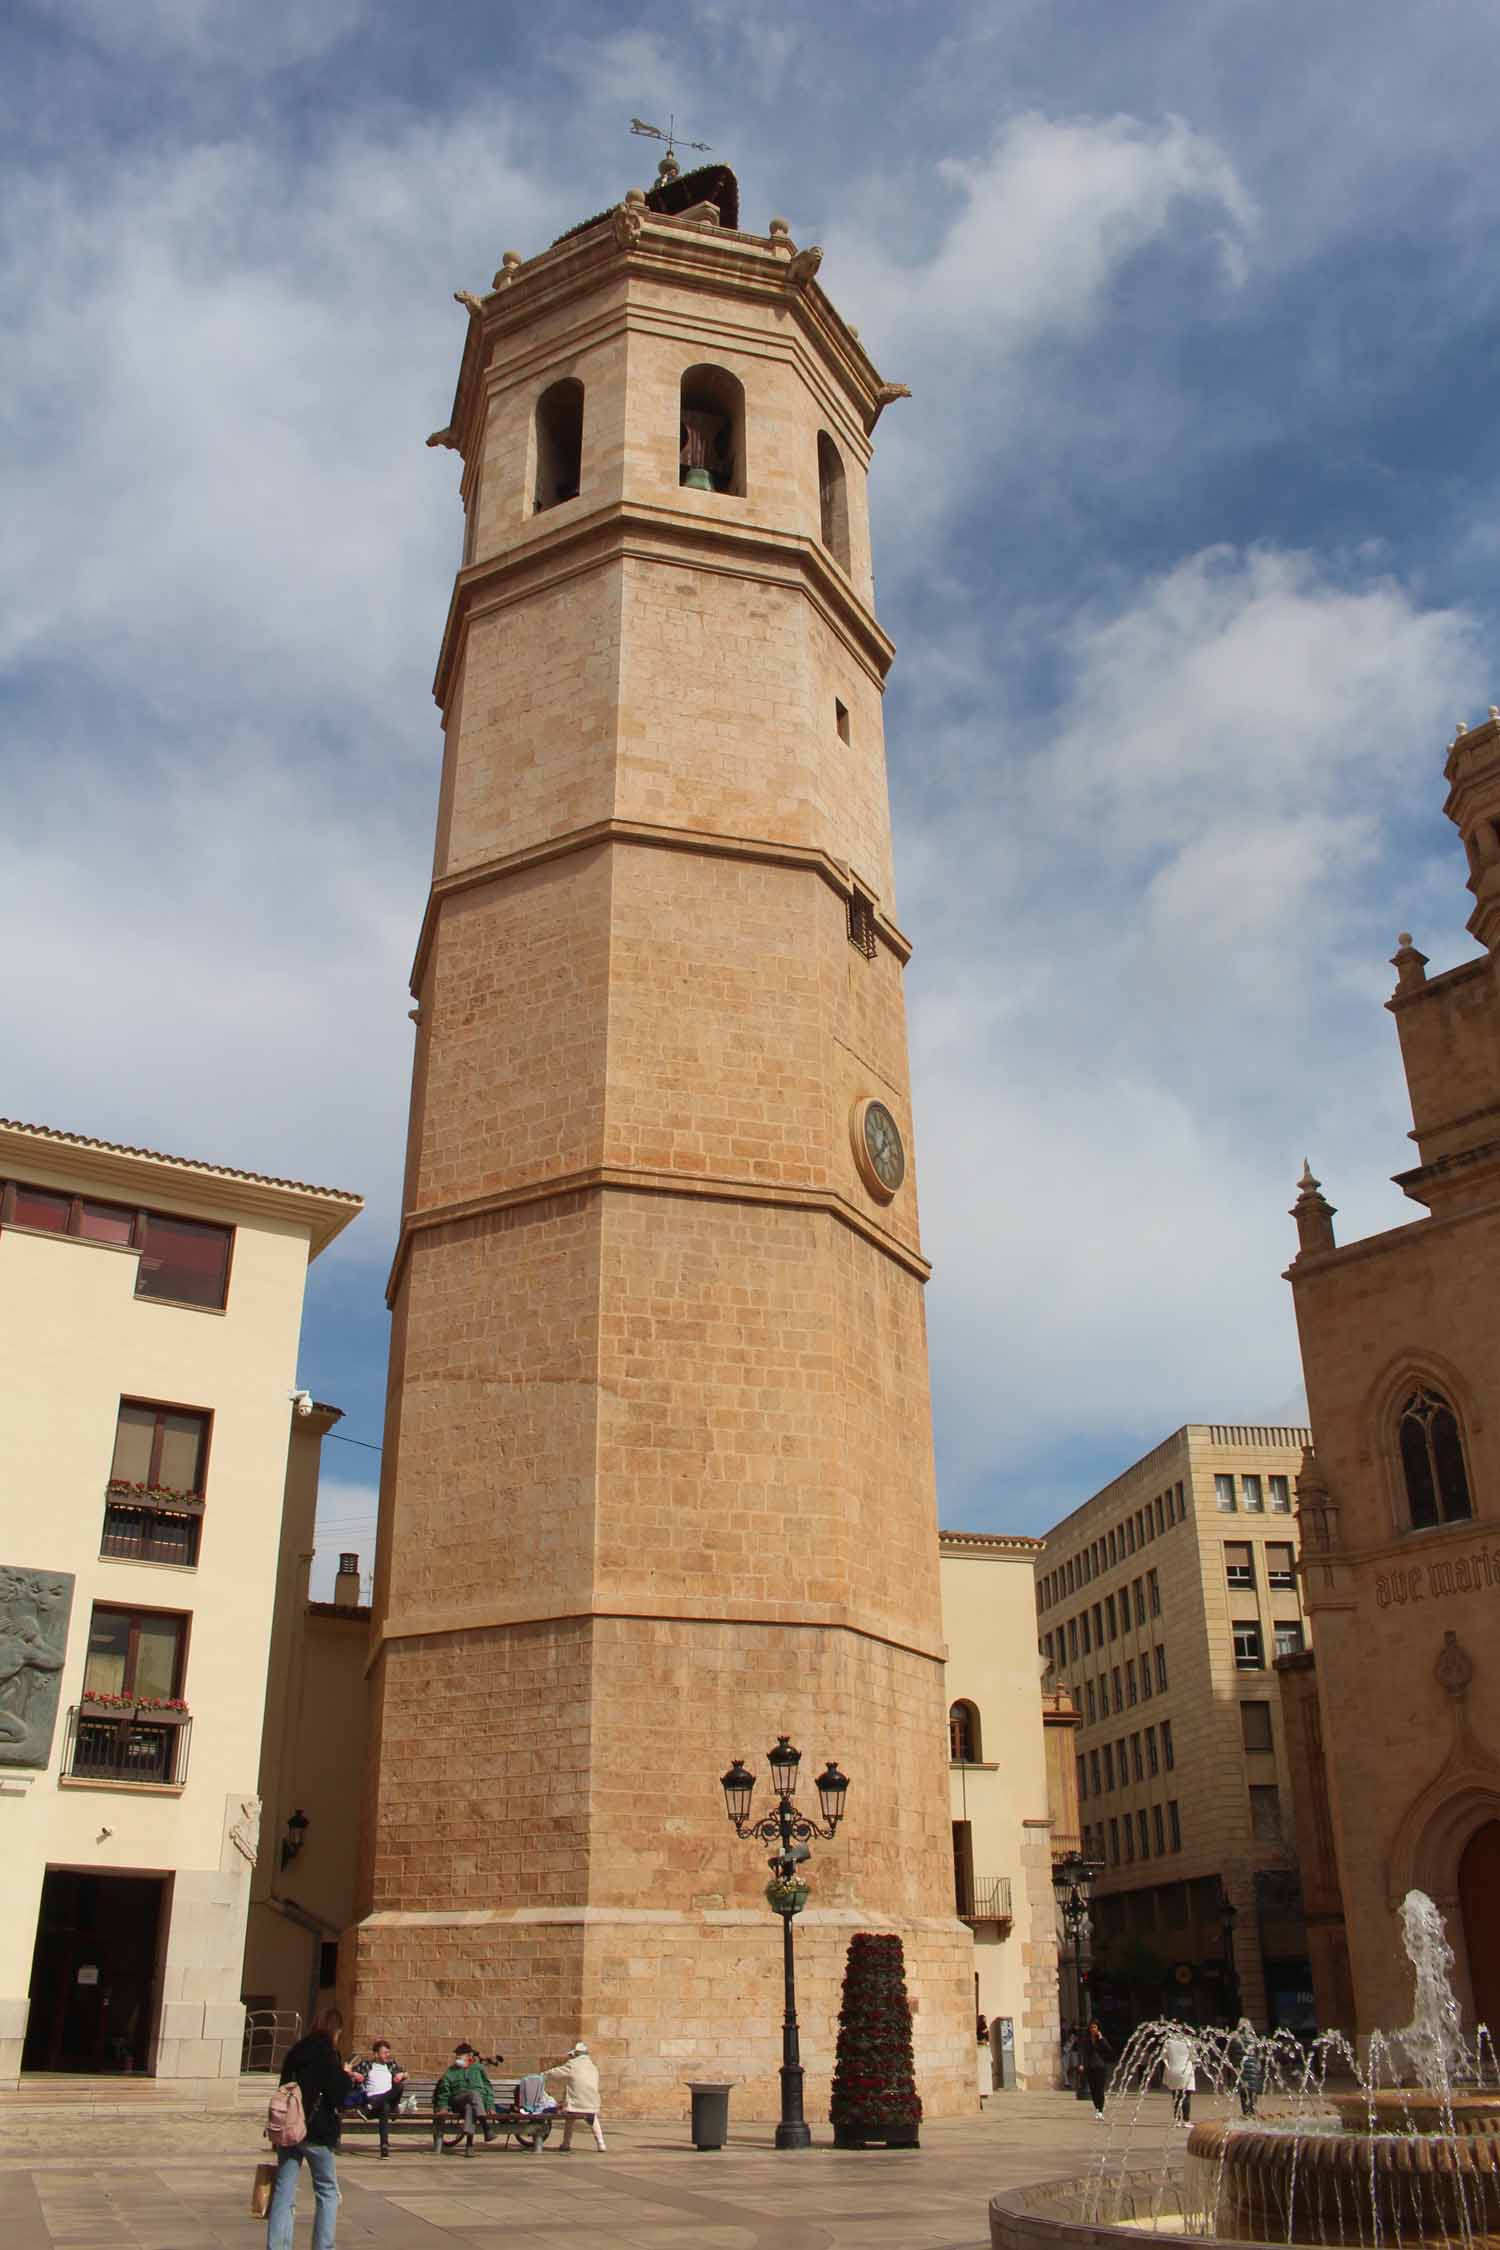 Castello de la Plana, campanile el Fadri